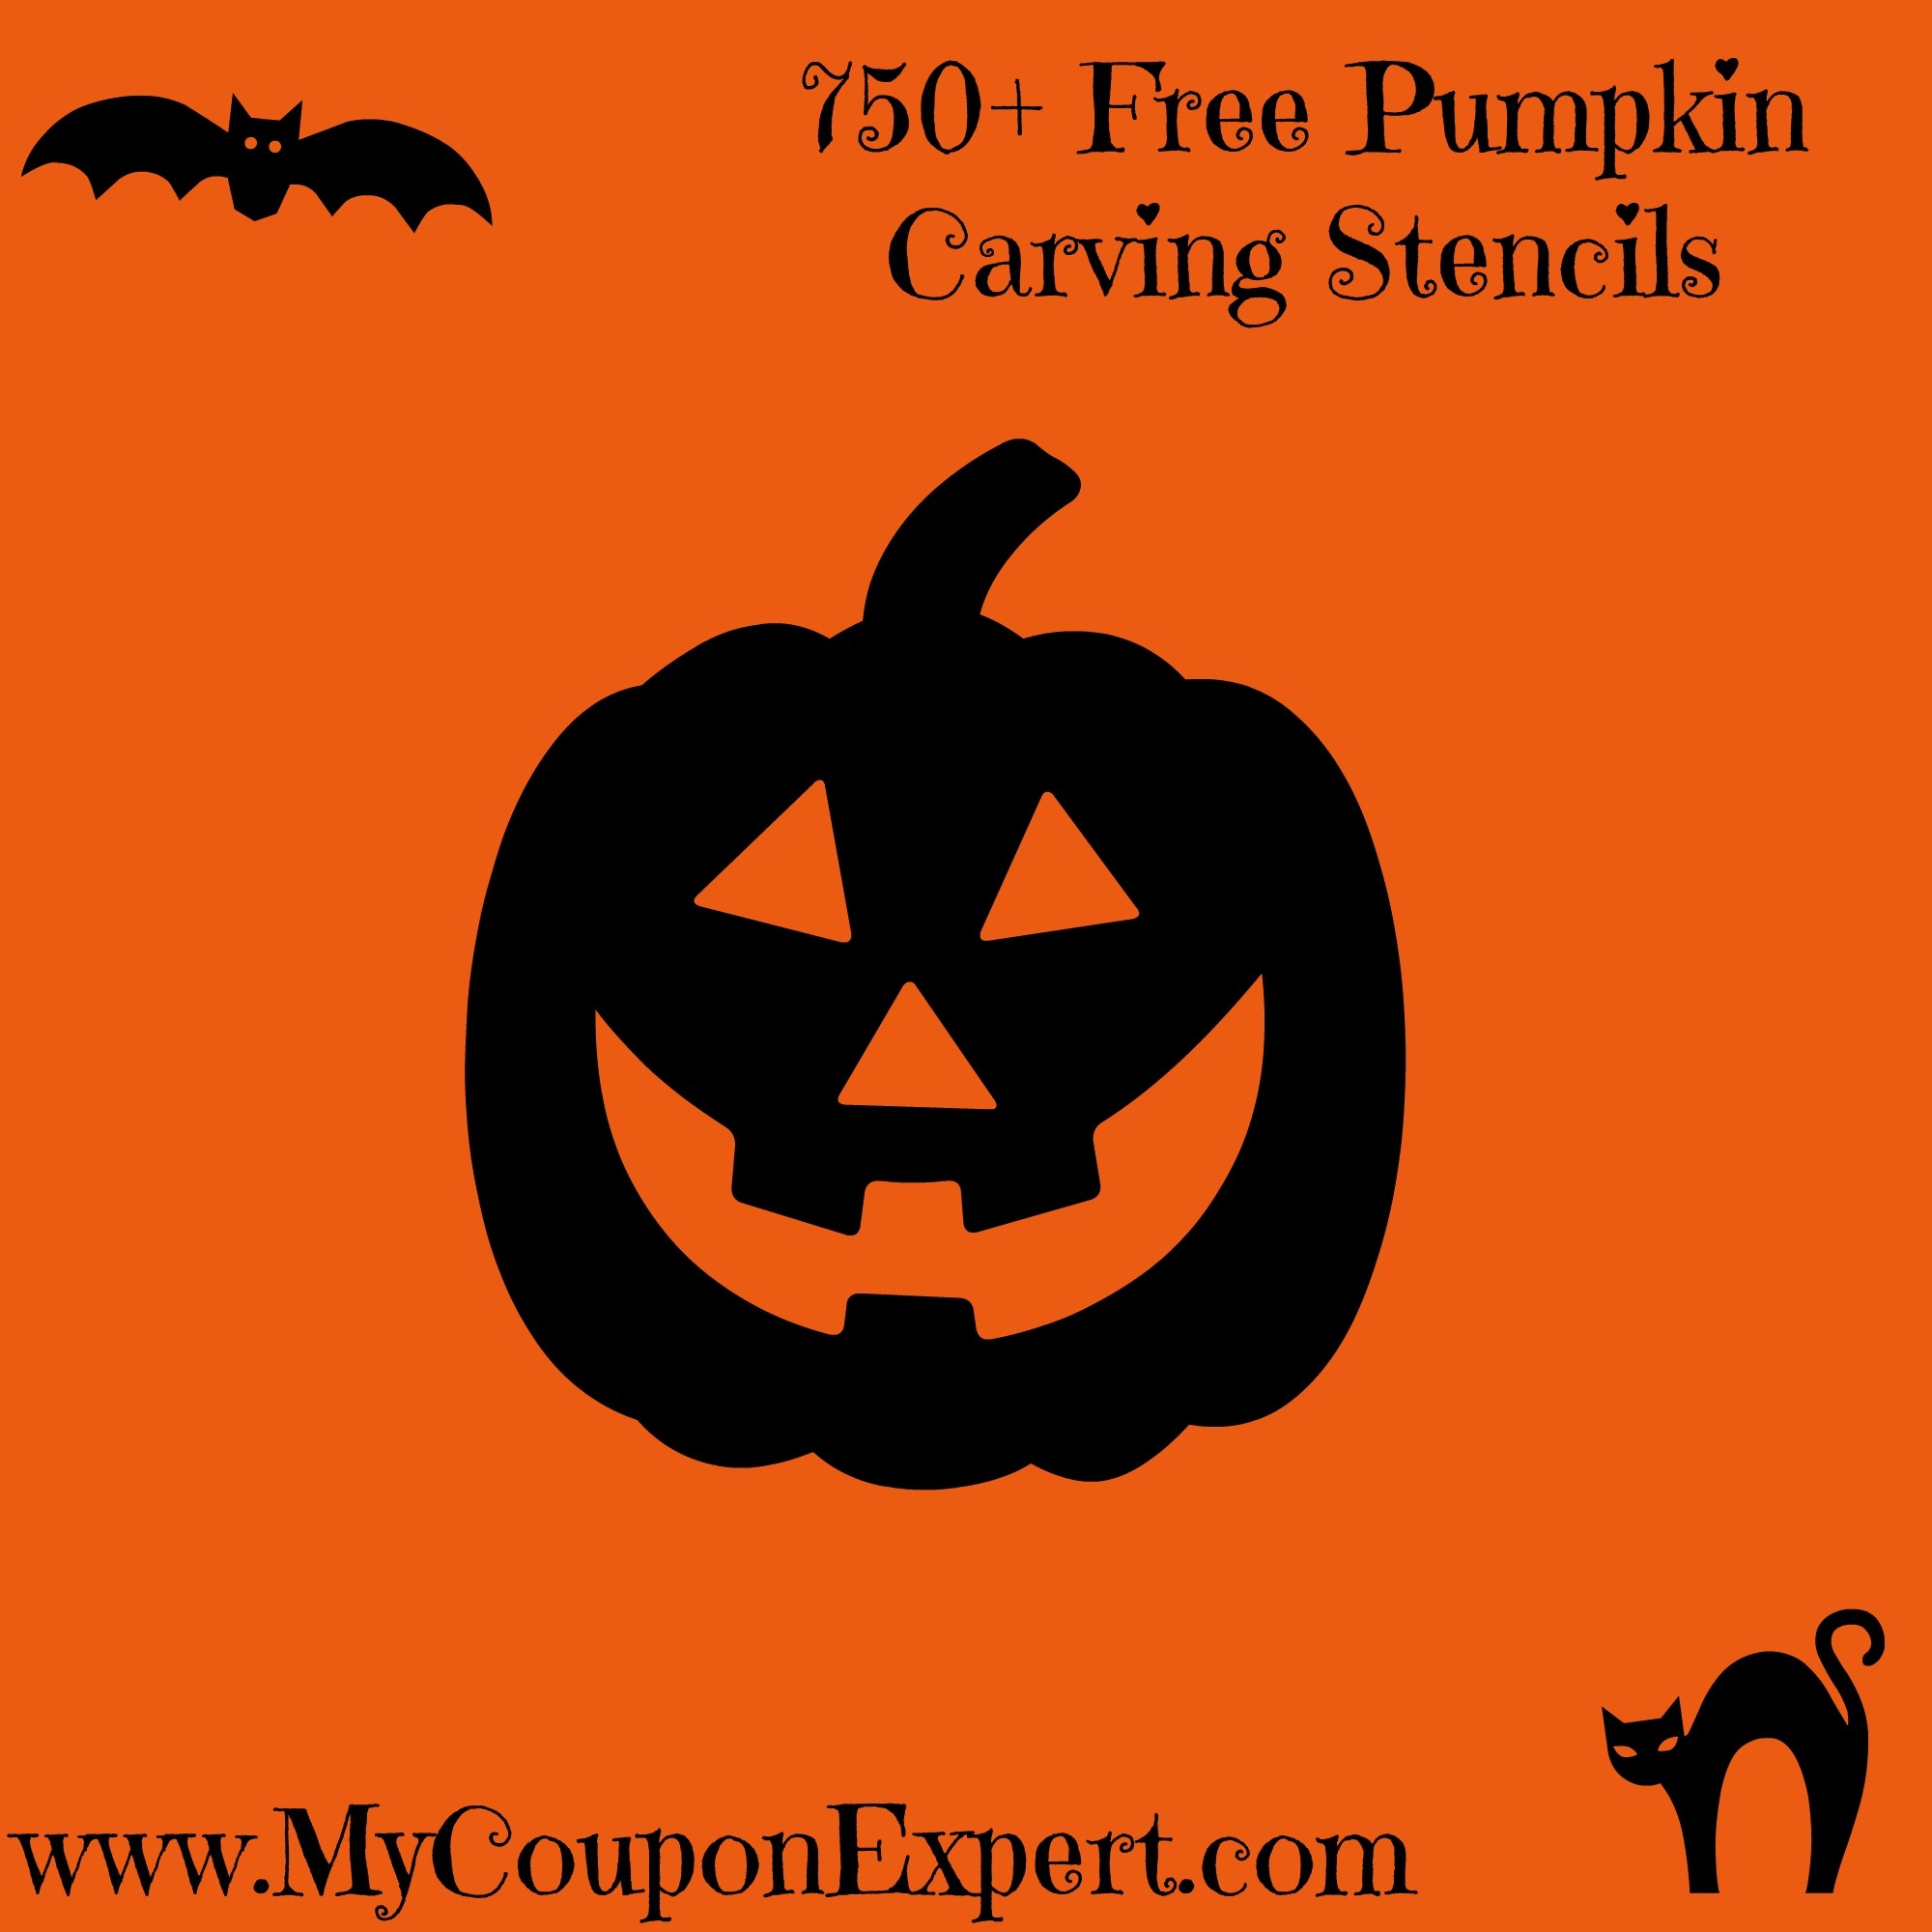 750+ Free Pumpkin Carving Stencils · - Pumpkin Patterns Free Printable